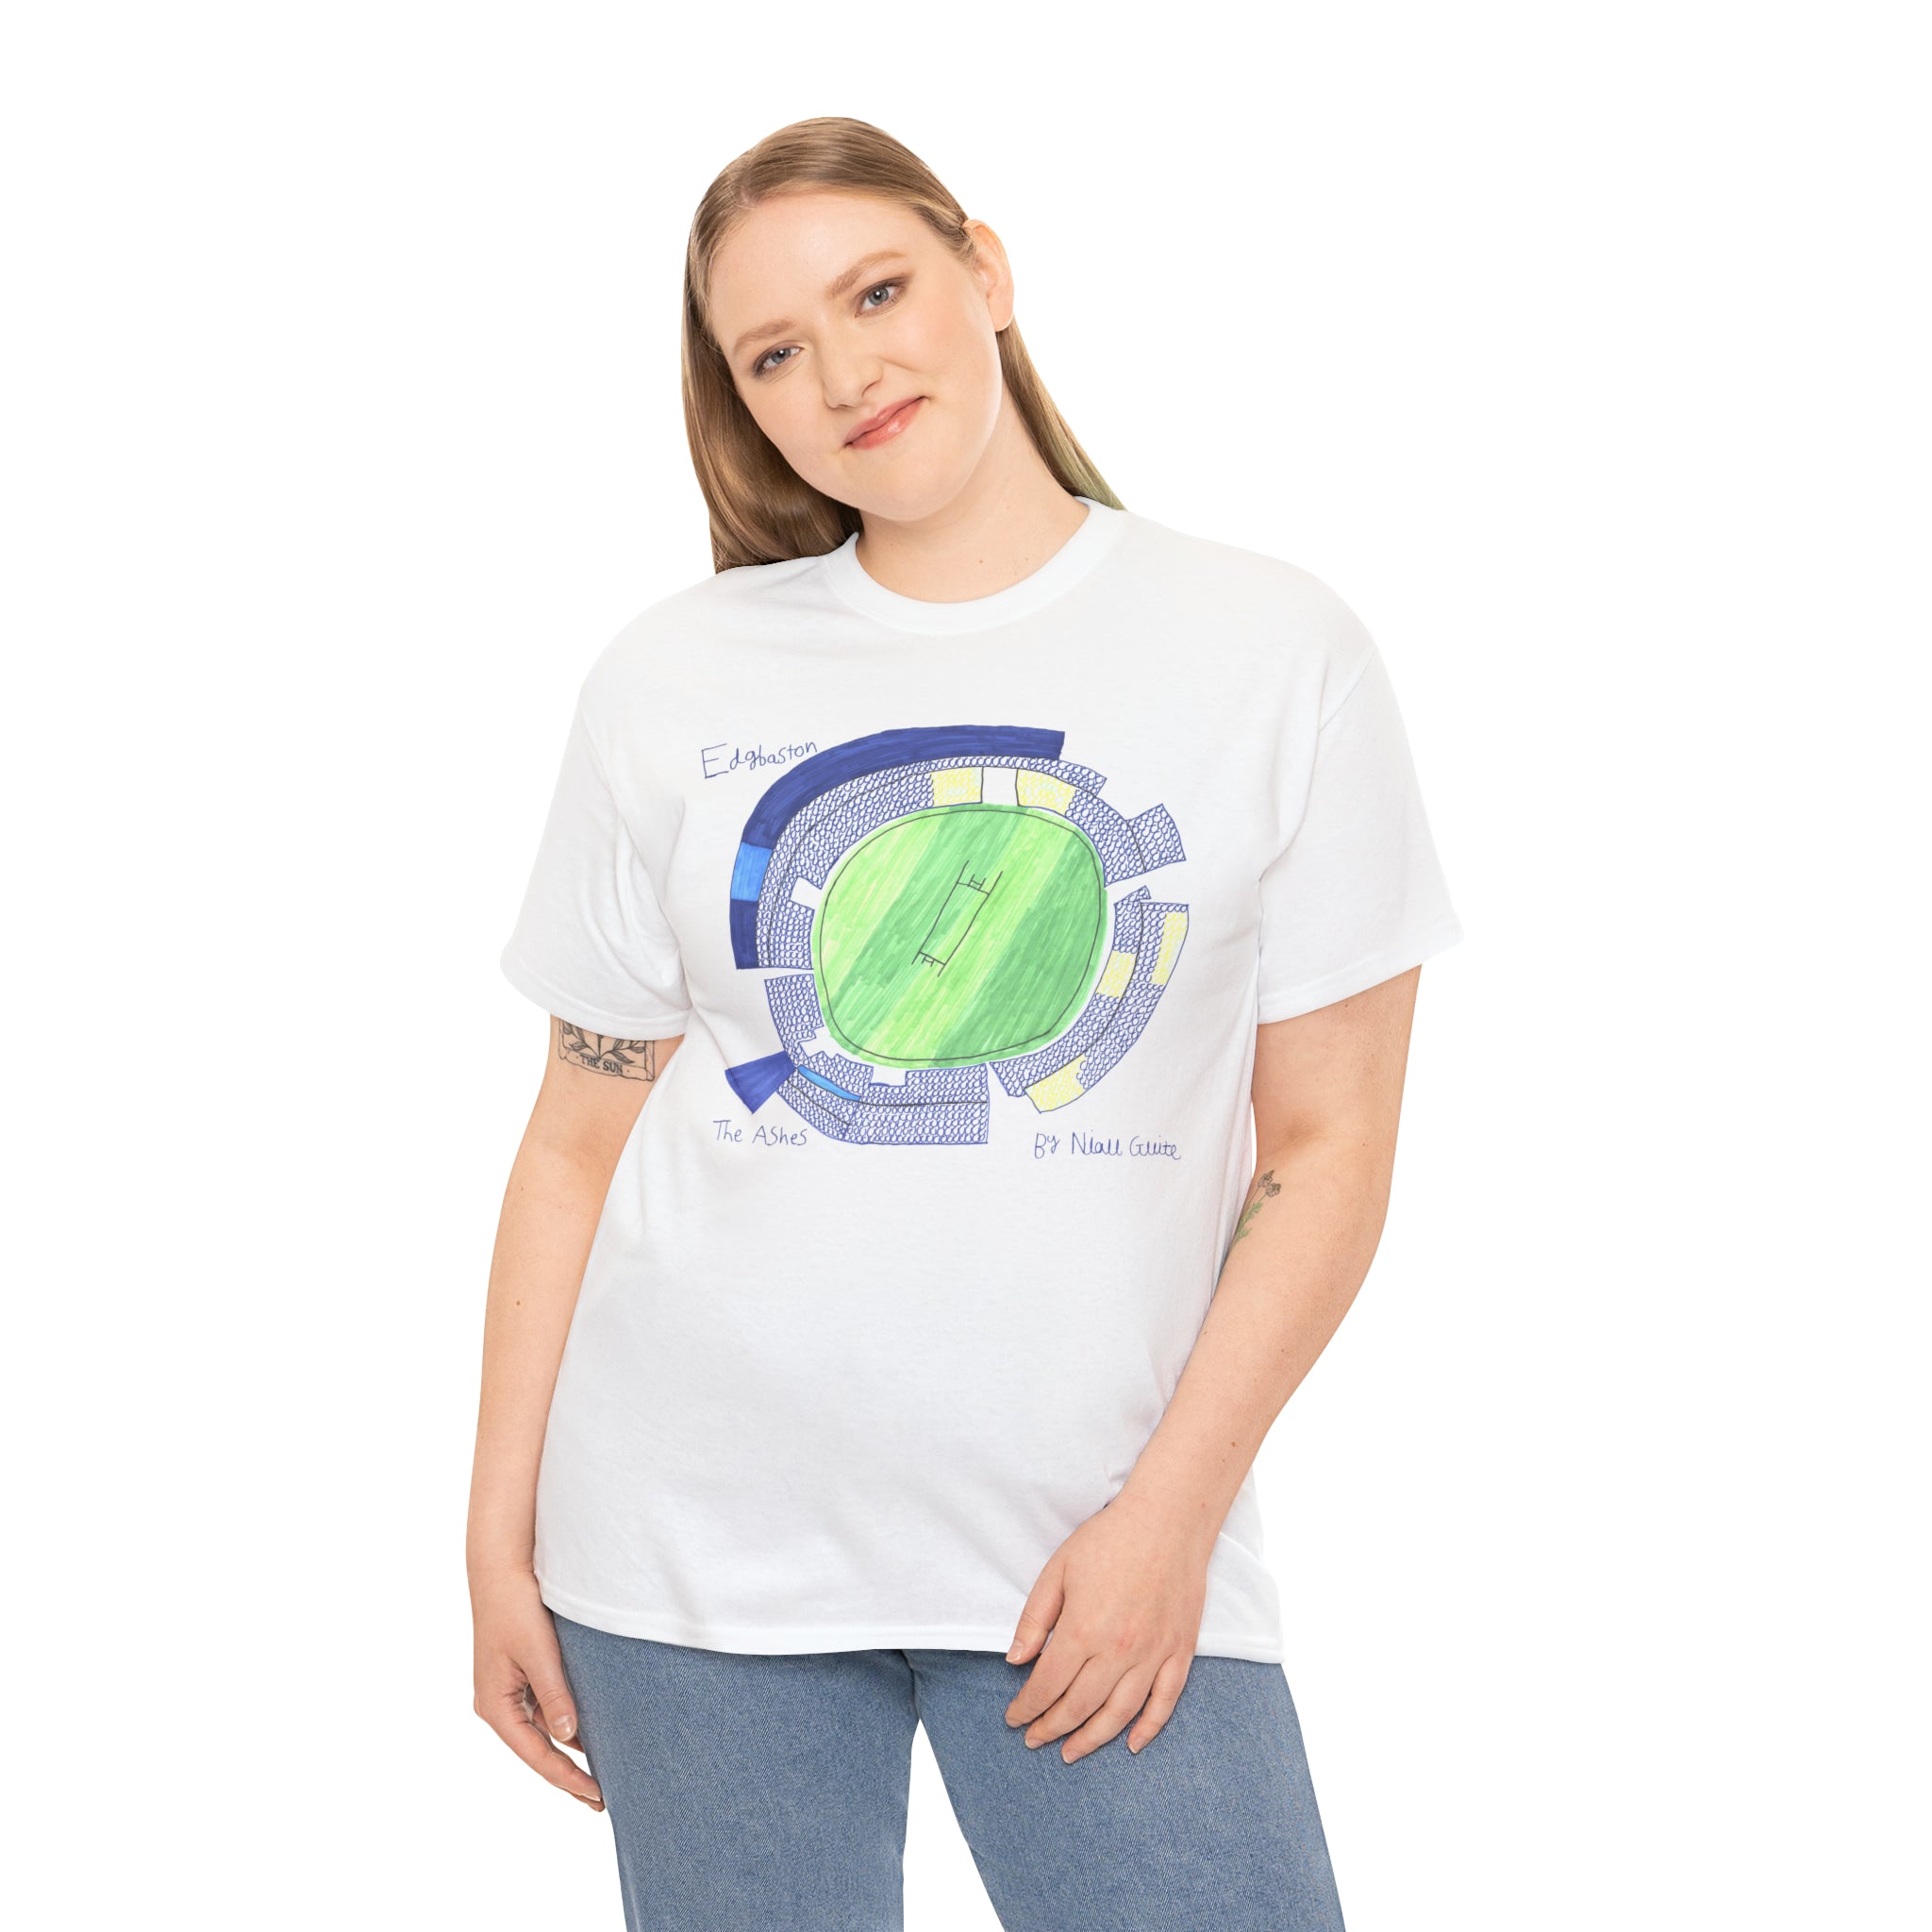 Edgbaston Cricket Ground - Unisex Cotton T-Shirt